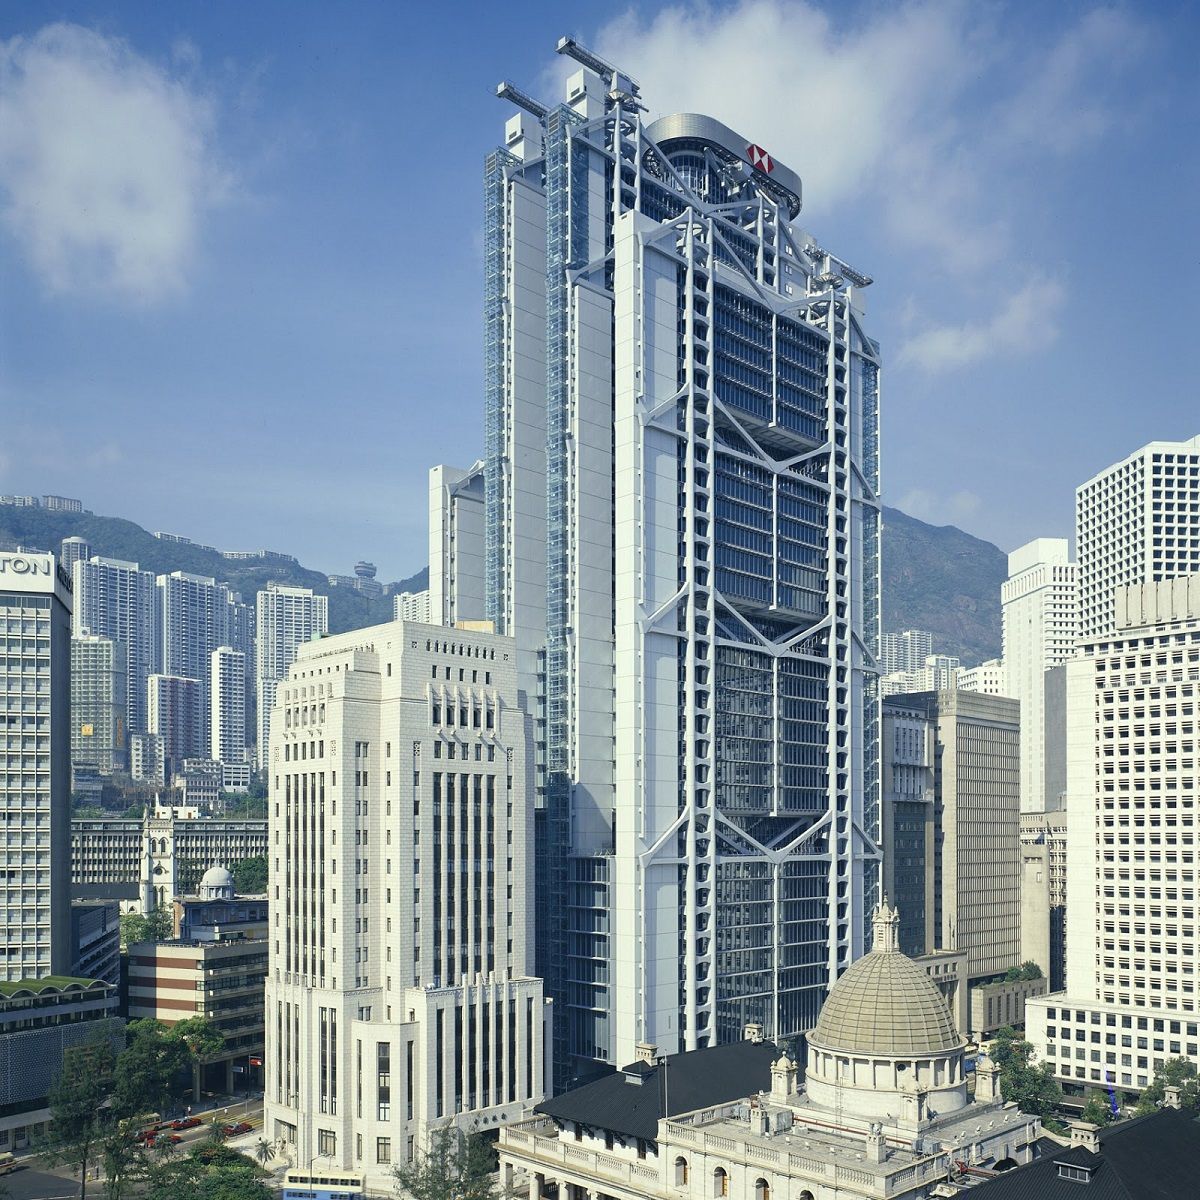 hsbc skyscraper hong kong norman foster dezeen 1704 sq 2